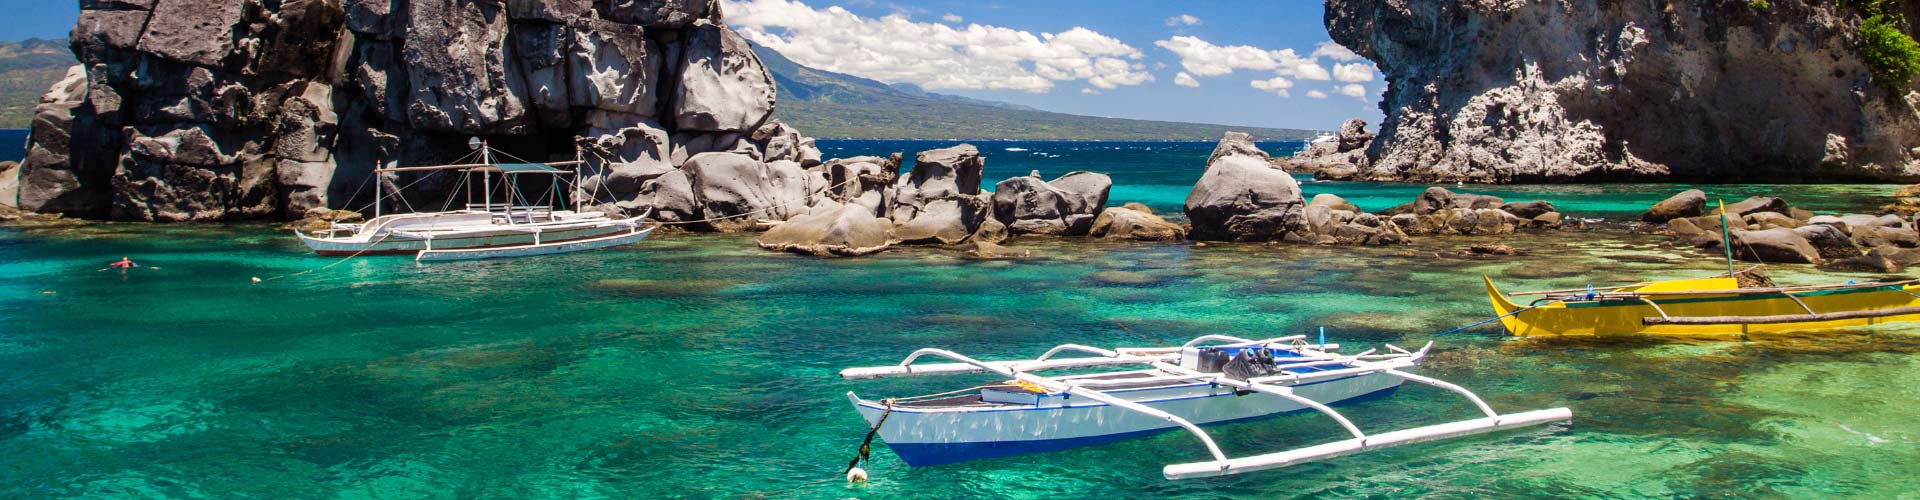 Philippines Island Tours | 10 Philippines Island Holiday 